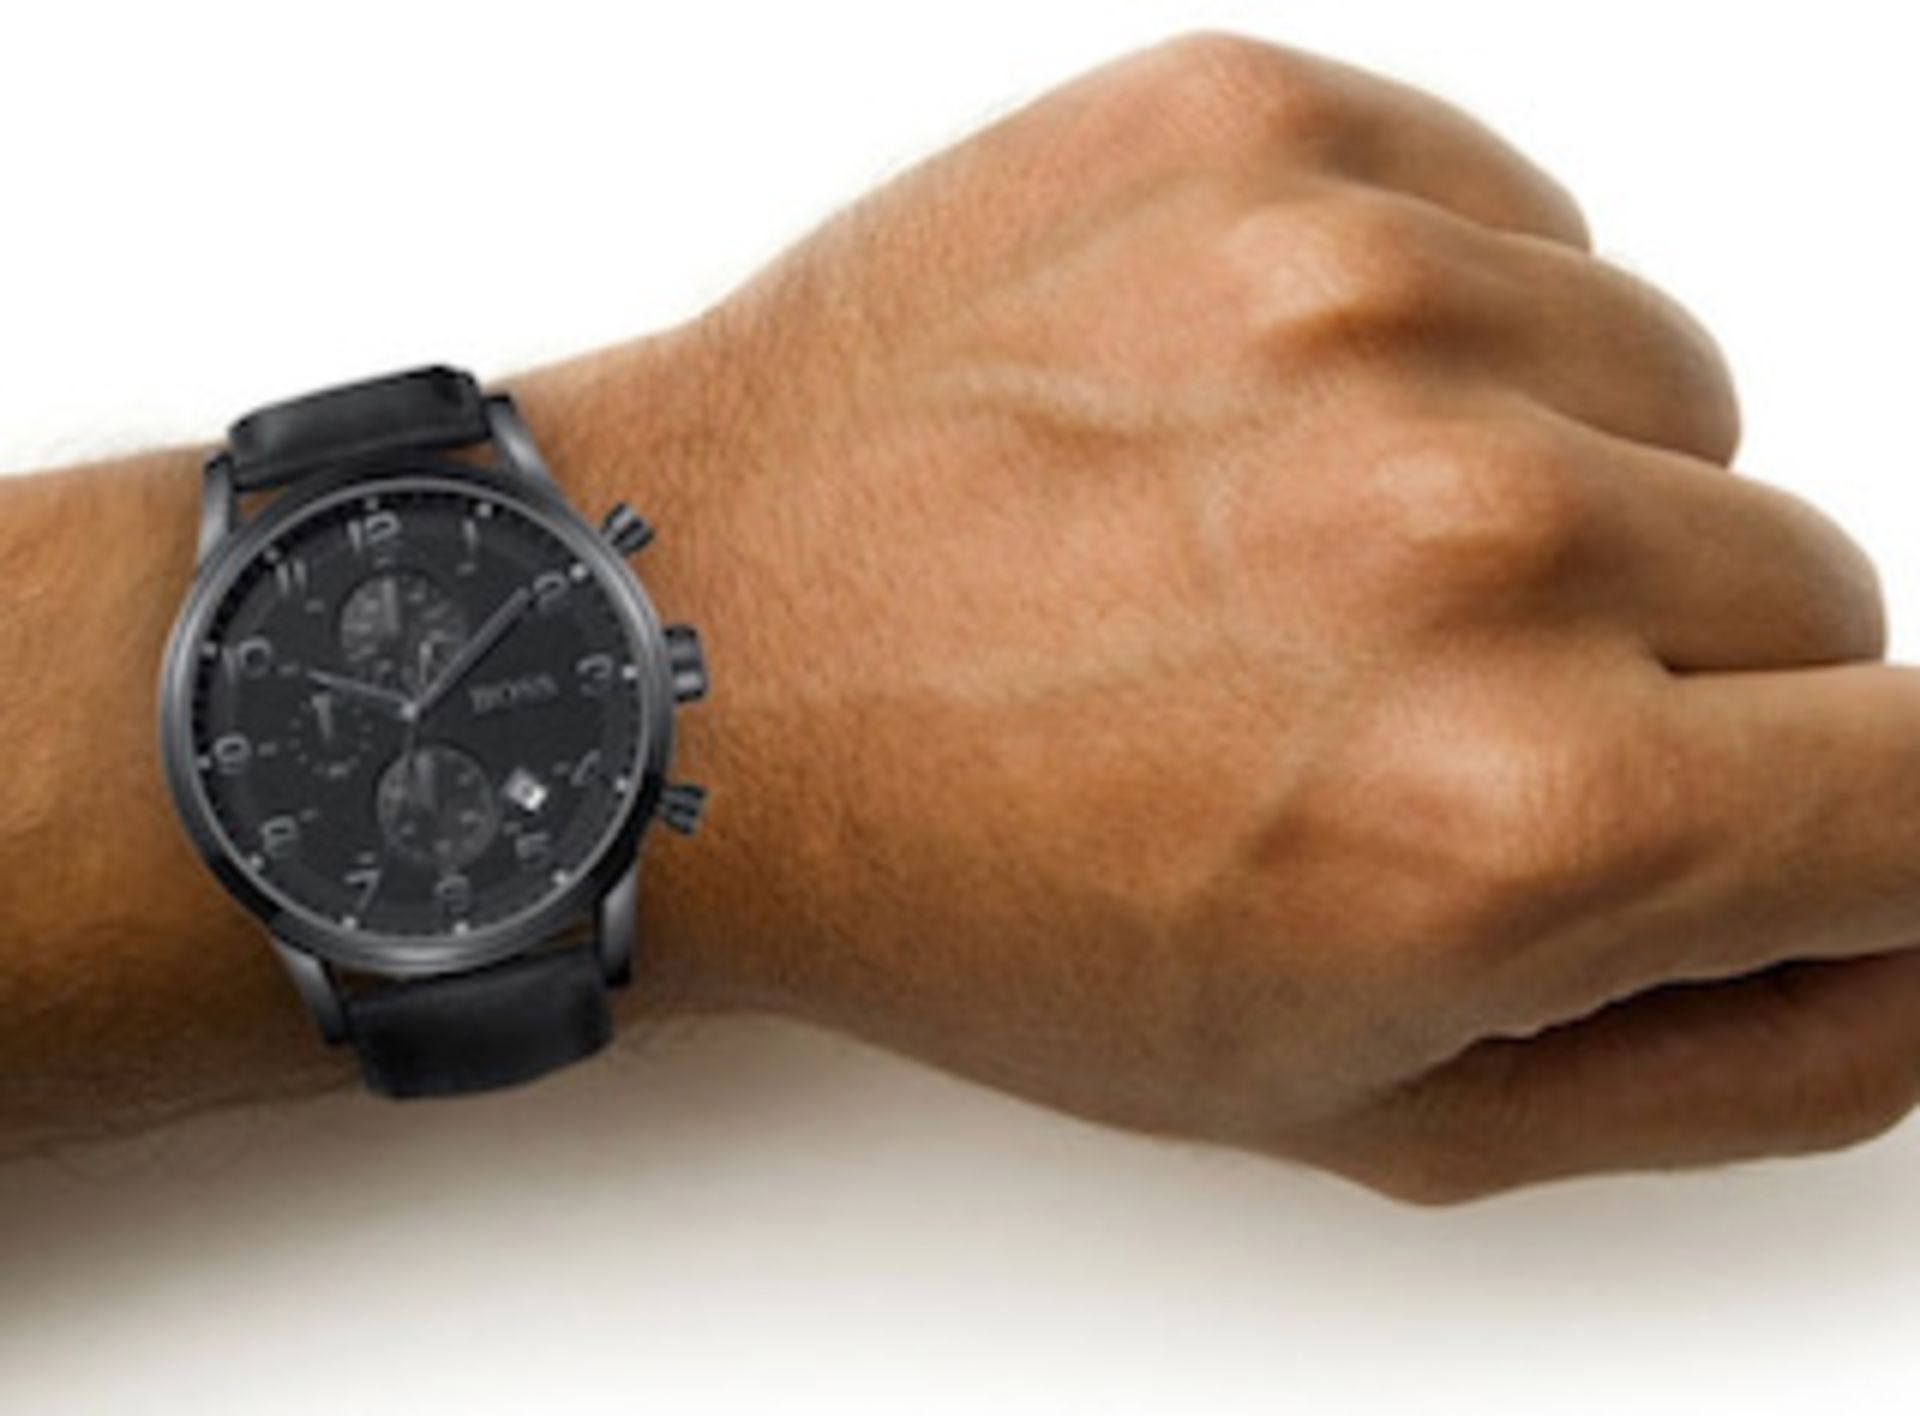 Hugo Boss 1512567 Men's Aeroliner Black Dial Black Leather Strap Chronograph Watch - Image 2 of 5